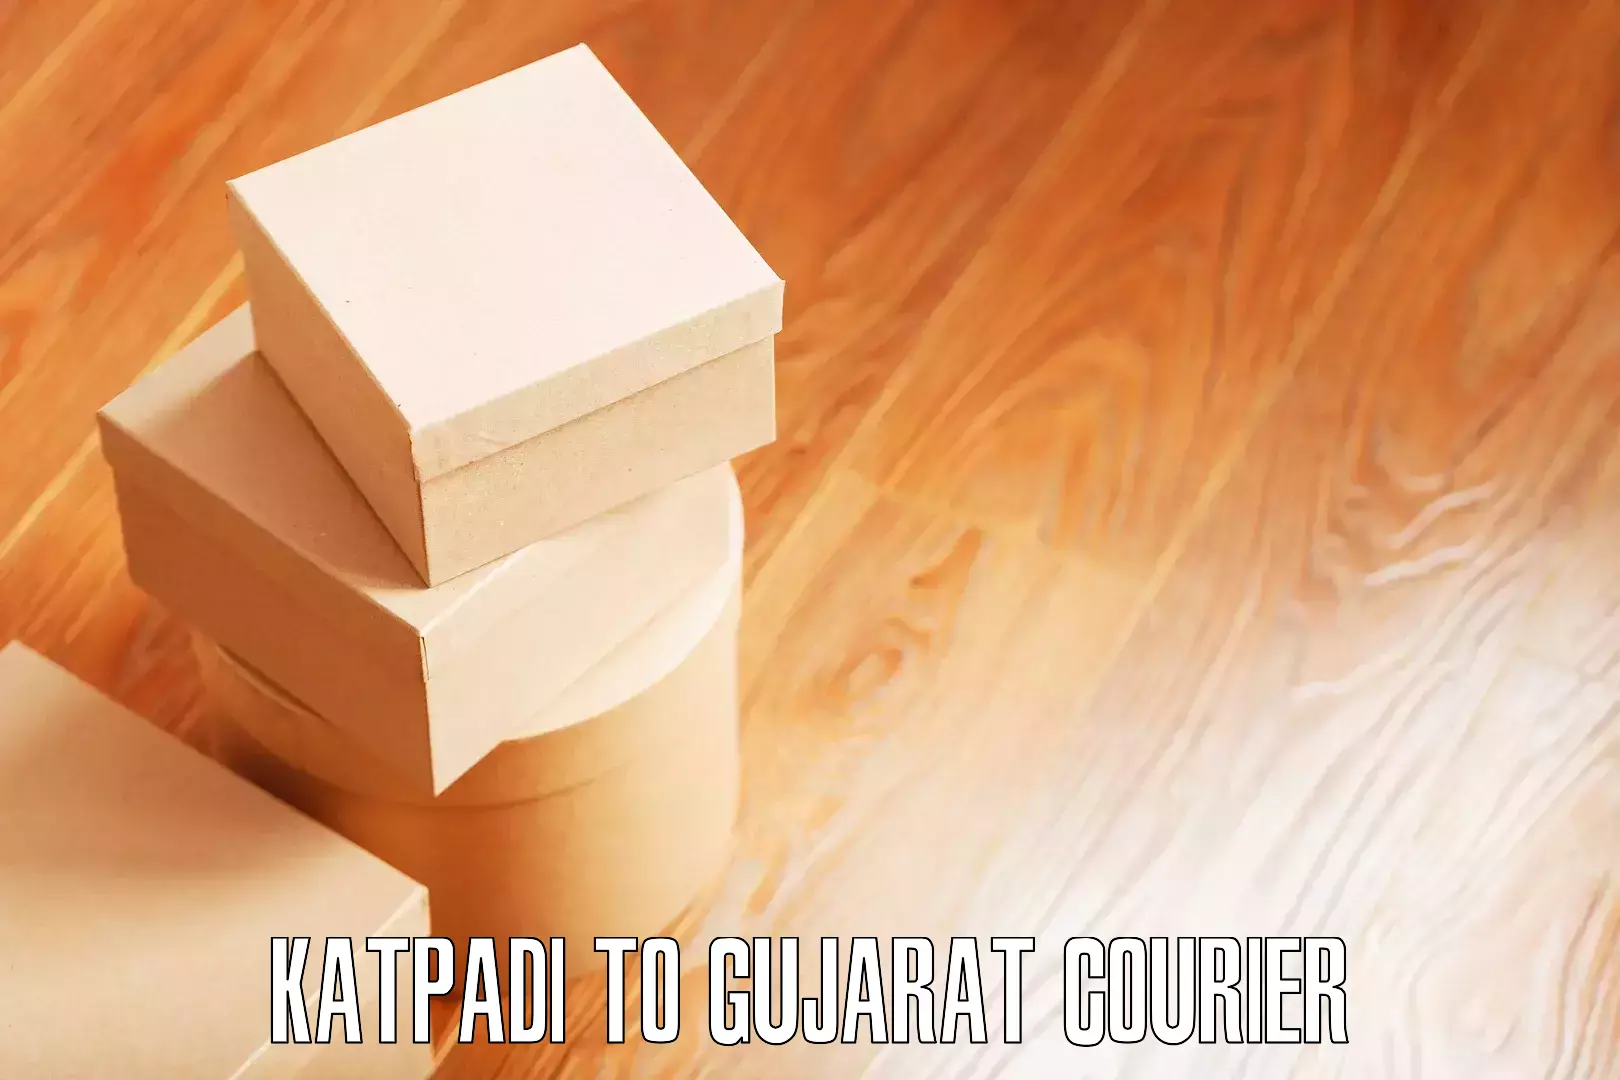 Efficient moving company Katpadi to Gujarat